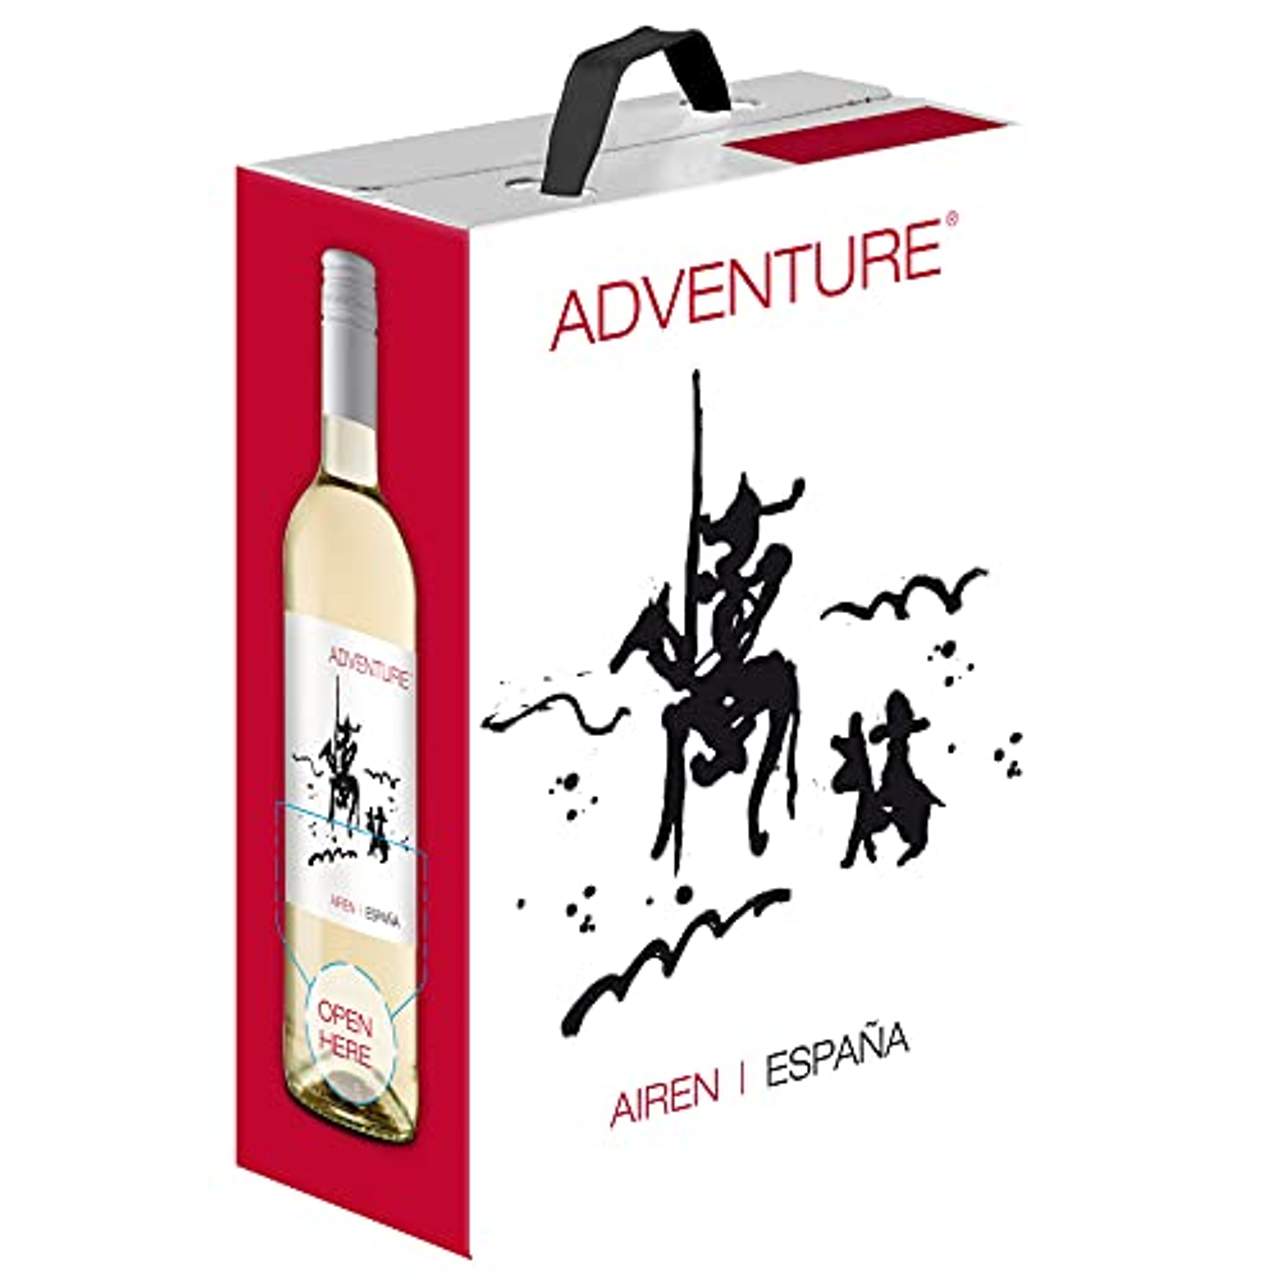 Adventure Airen Vino Blanco trocken Bag-in-Box